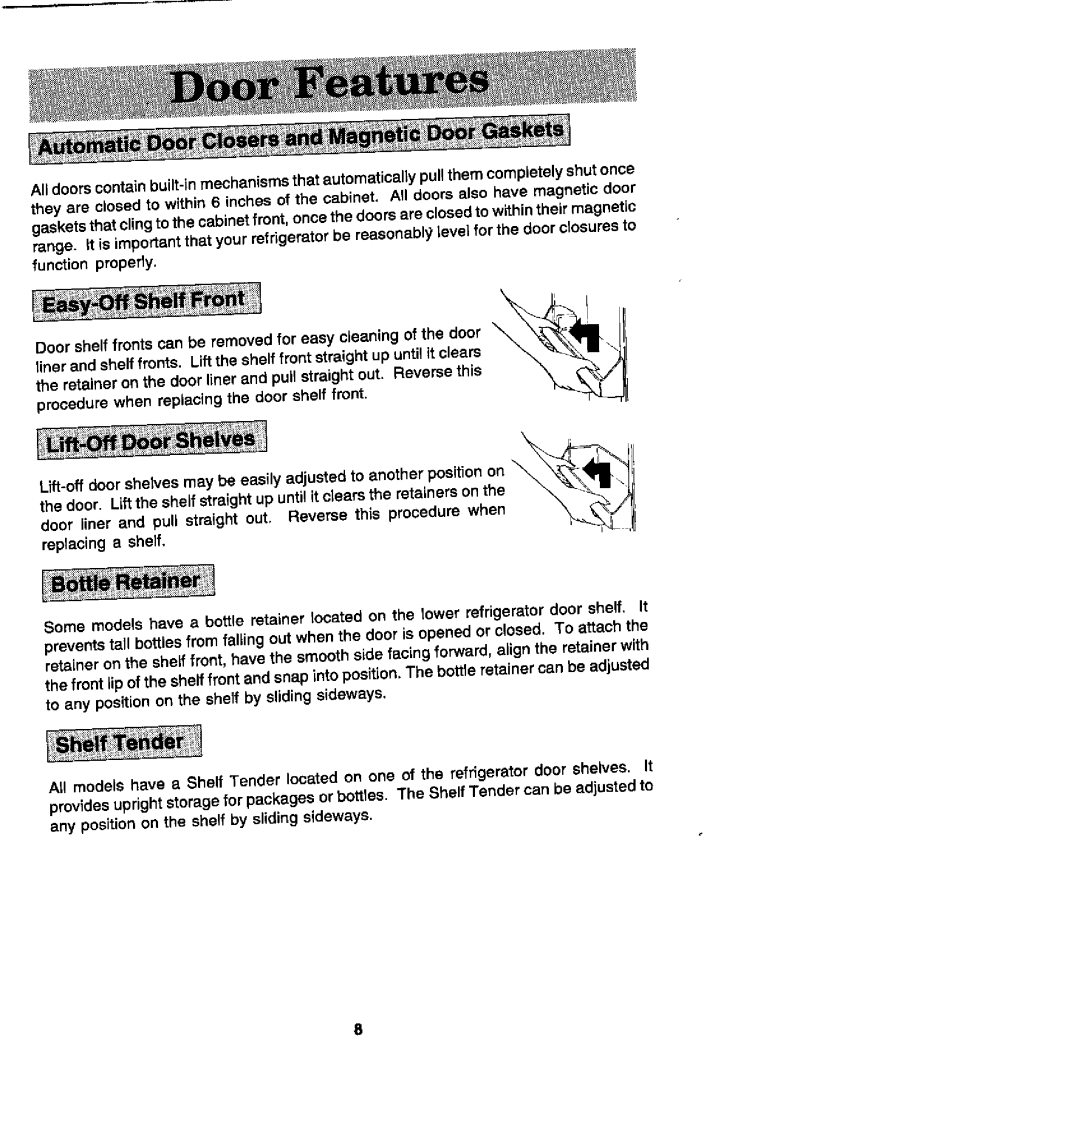 Whirlpool JRSD209A manual procedure when replacing the door shelf front 